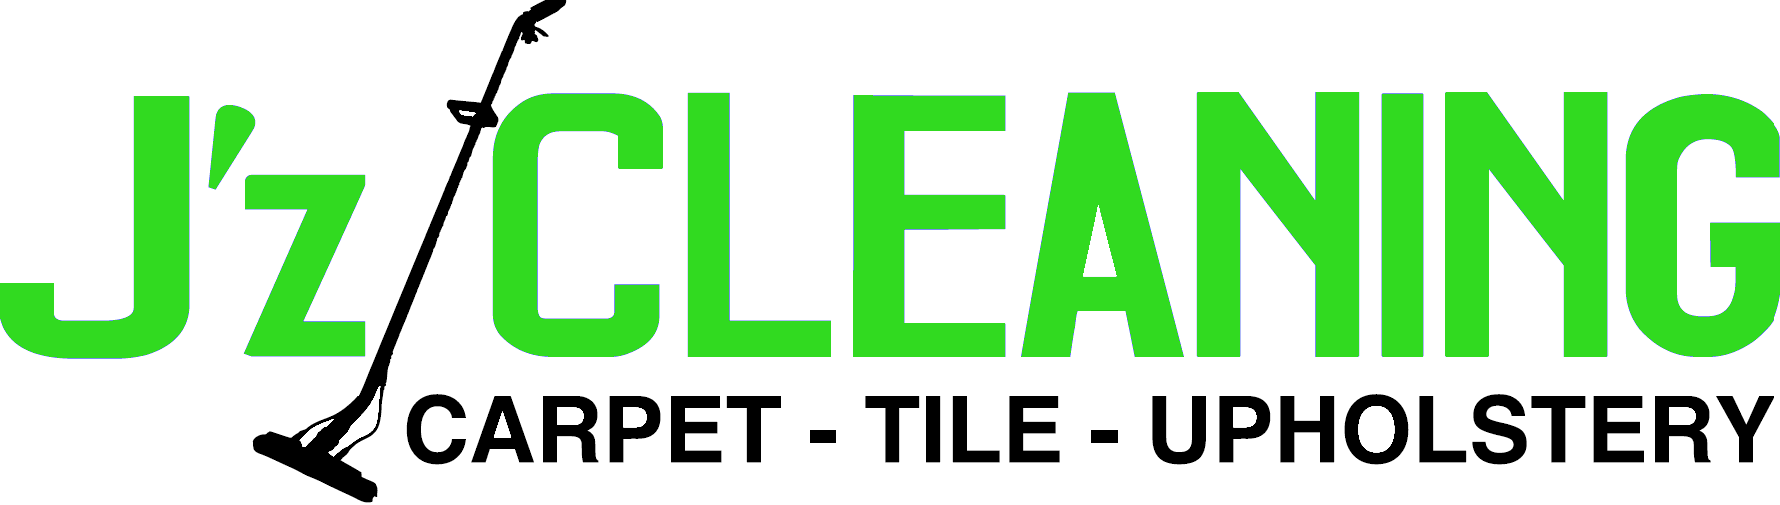 J'Z Cleaning, LLC Logo